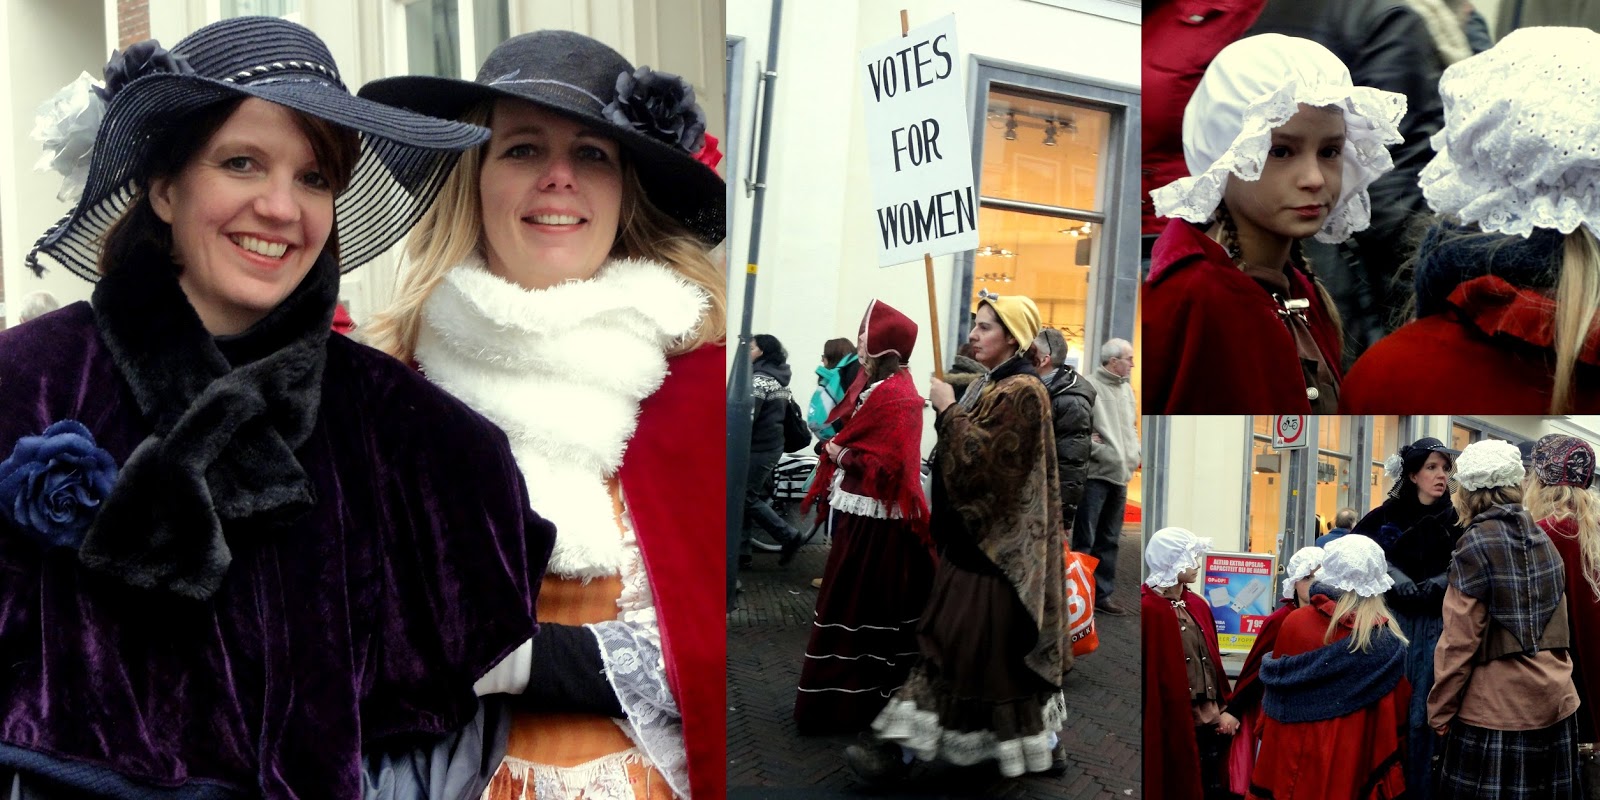 Charles Dickens Festival (Dickens Festijn) in Deventer Part 1: The 3 ...